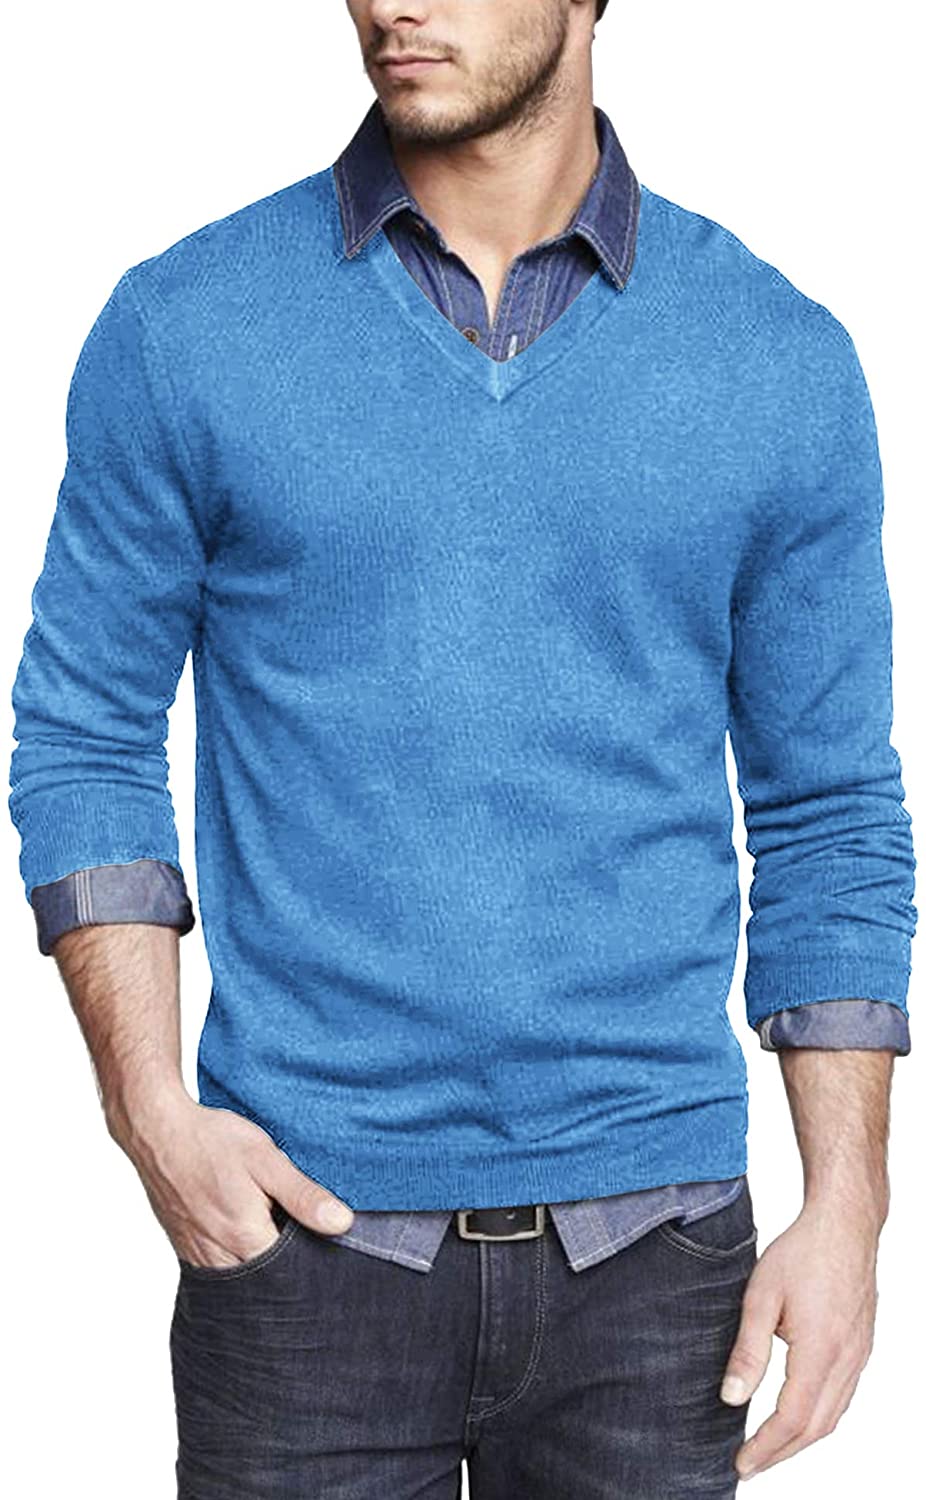 JINIDU Men's V Neck Knit Dress Sweater Casual Long Sleeve Slim Fit Pullover Top 